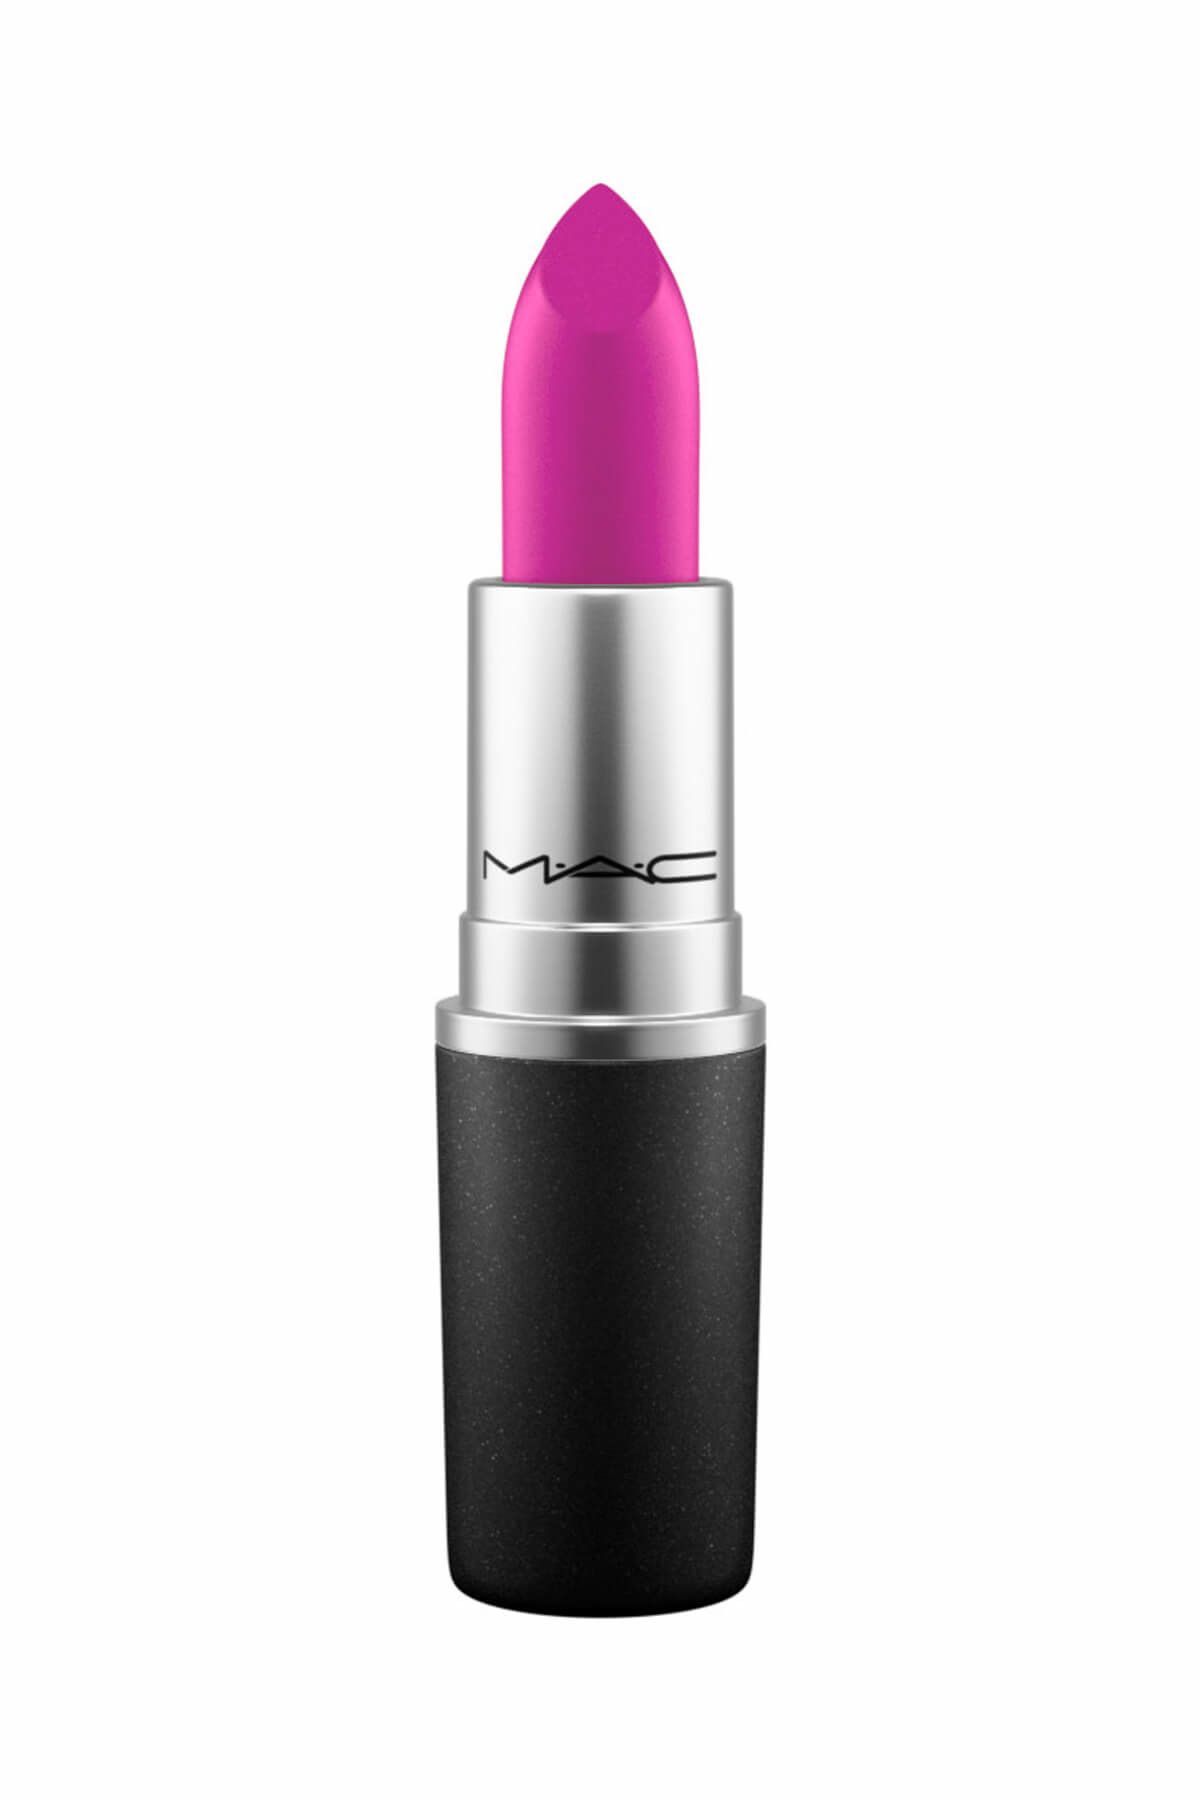 Mac Ruj - Retro Matte Lipstick Flat Out Fabulous 3 g 773602314782